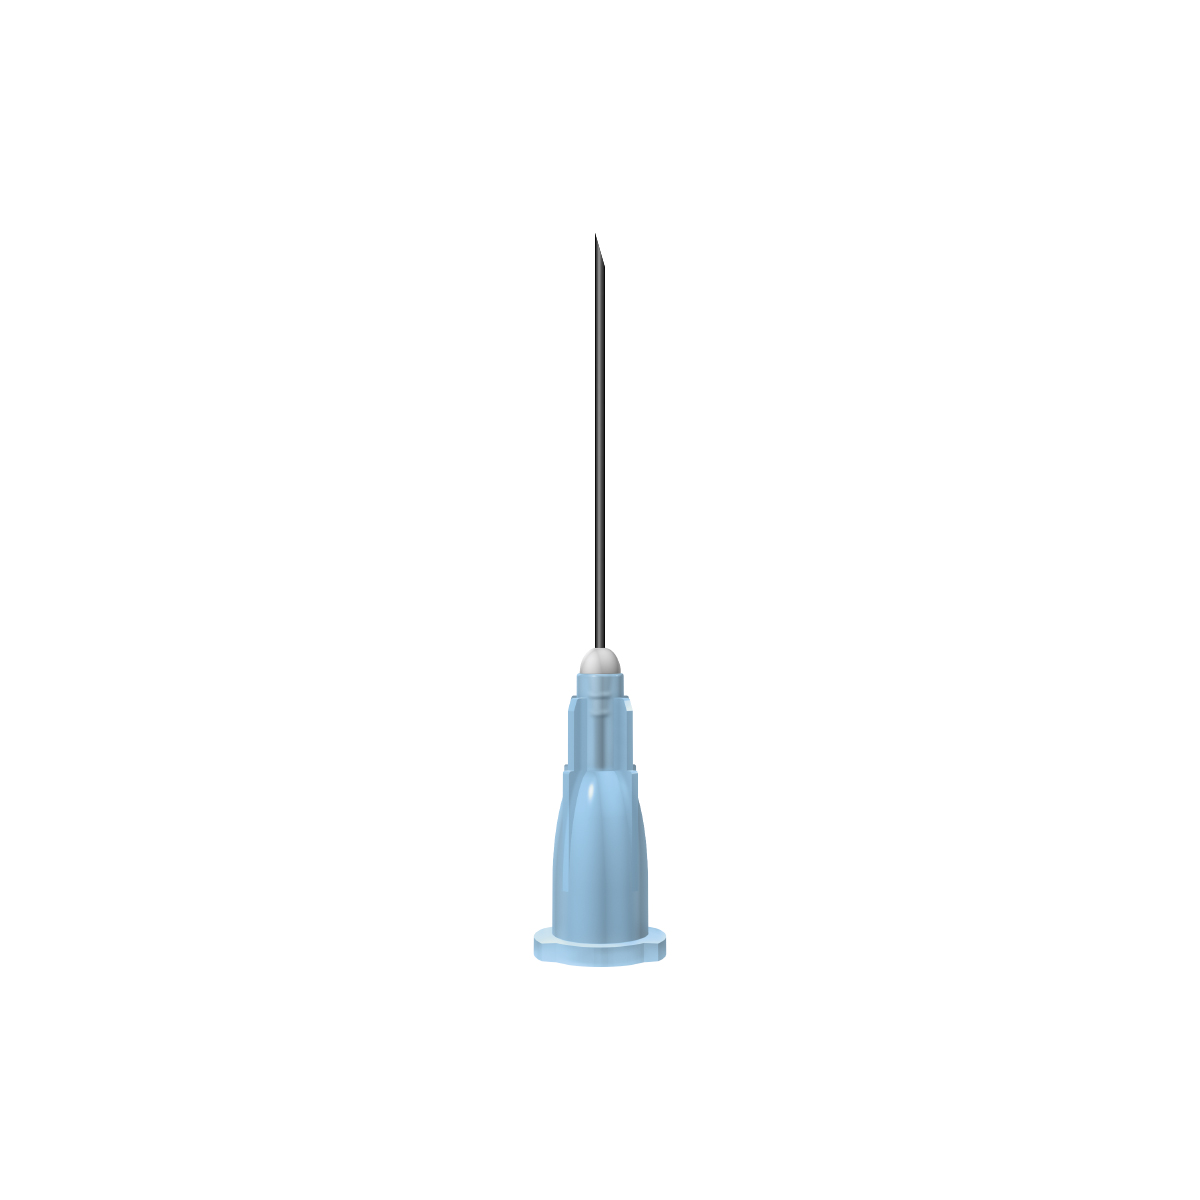 Unisharp: Blue 23G 25mm (1 inch) needle